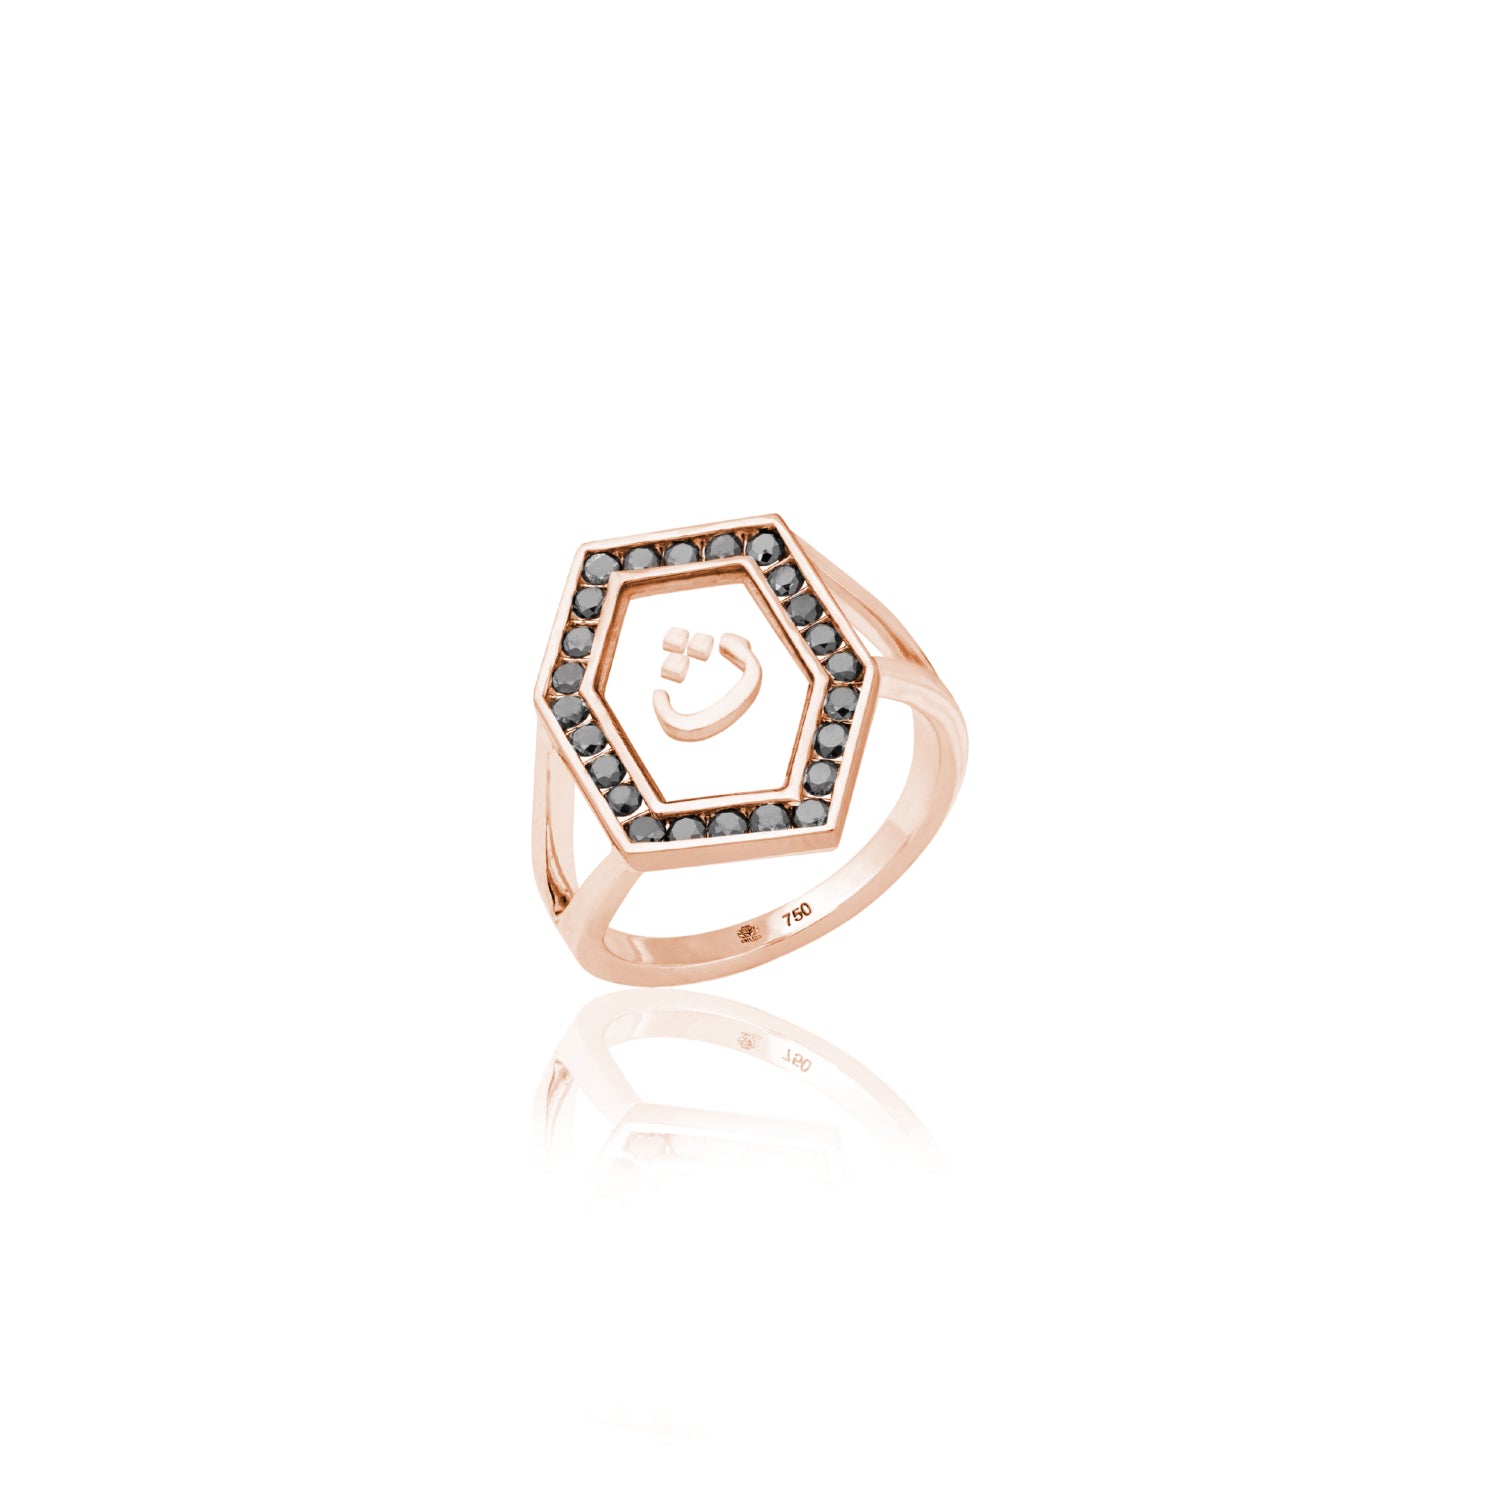 Qamoos 1.0 Letter ث Black Diamond Ring in Rose Gold